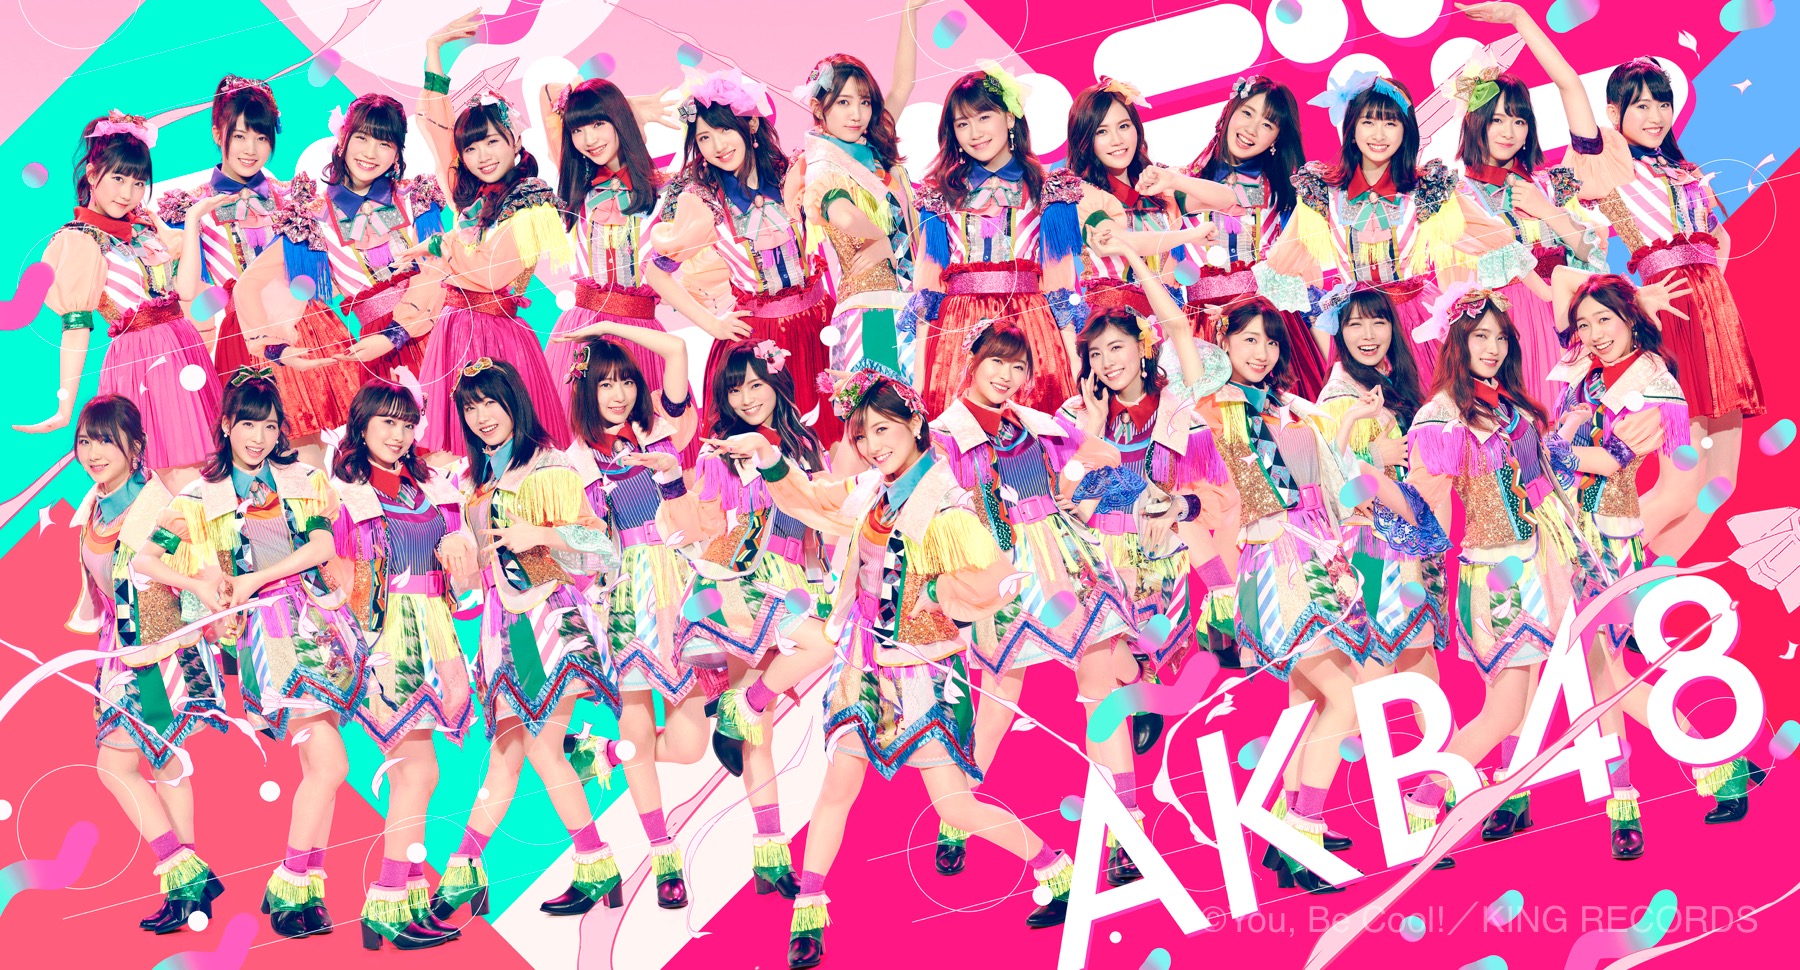 Nana Okada selected as the Center! : AKB48’s New Single “Ja-Ba-Ja” MV Release